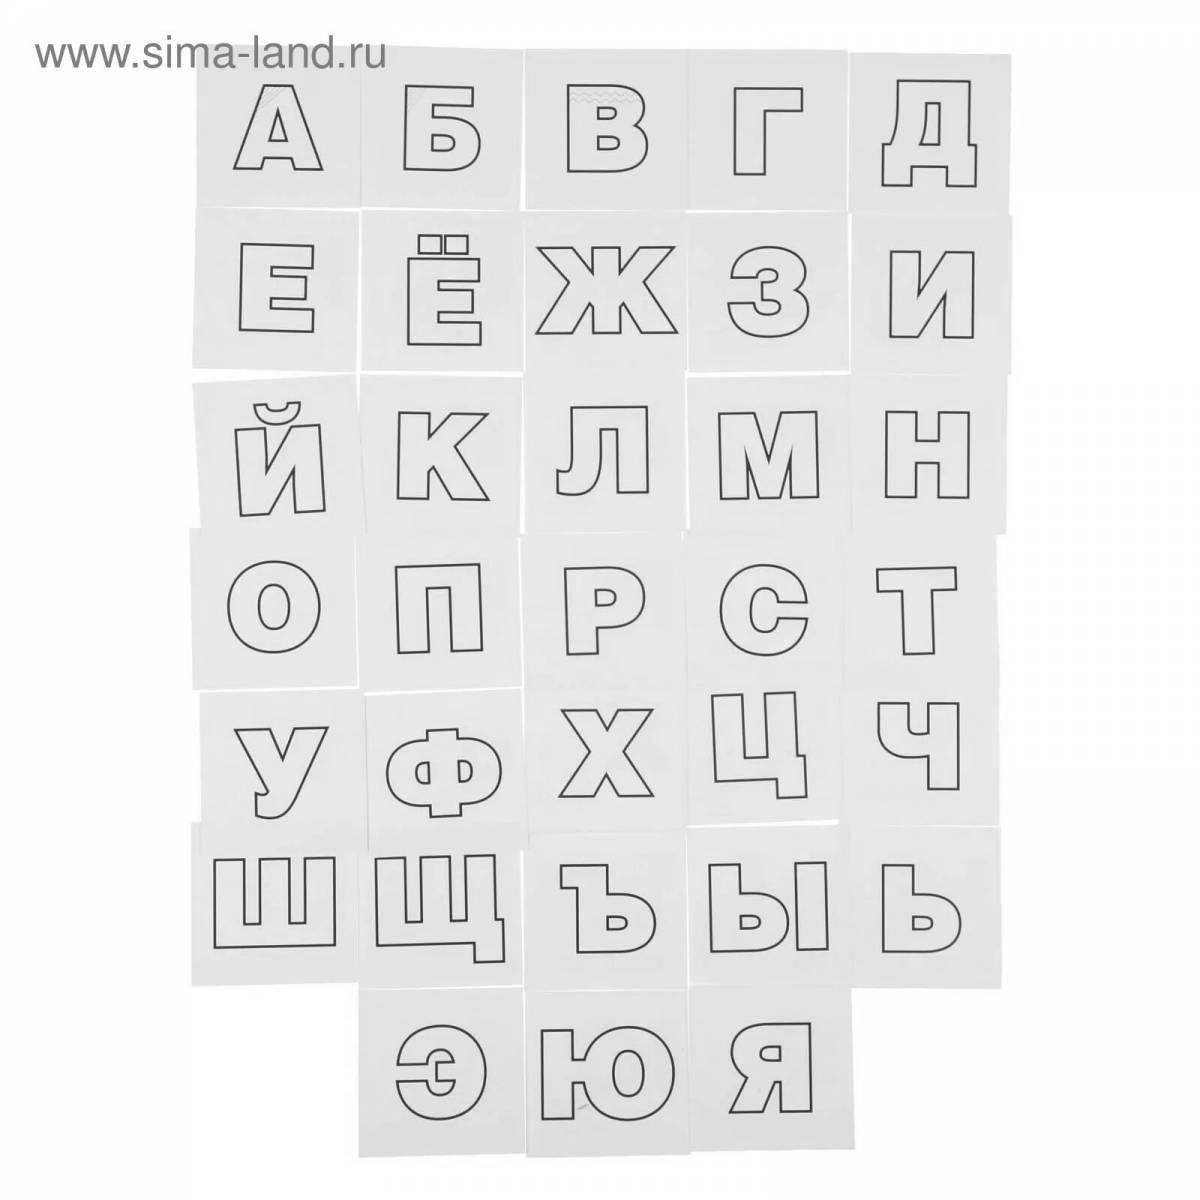 Attractive alphabet russian coloring book